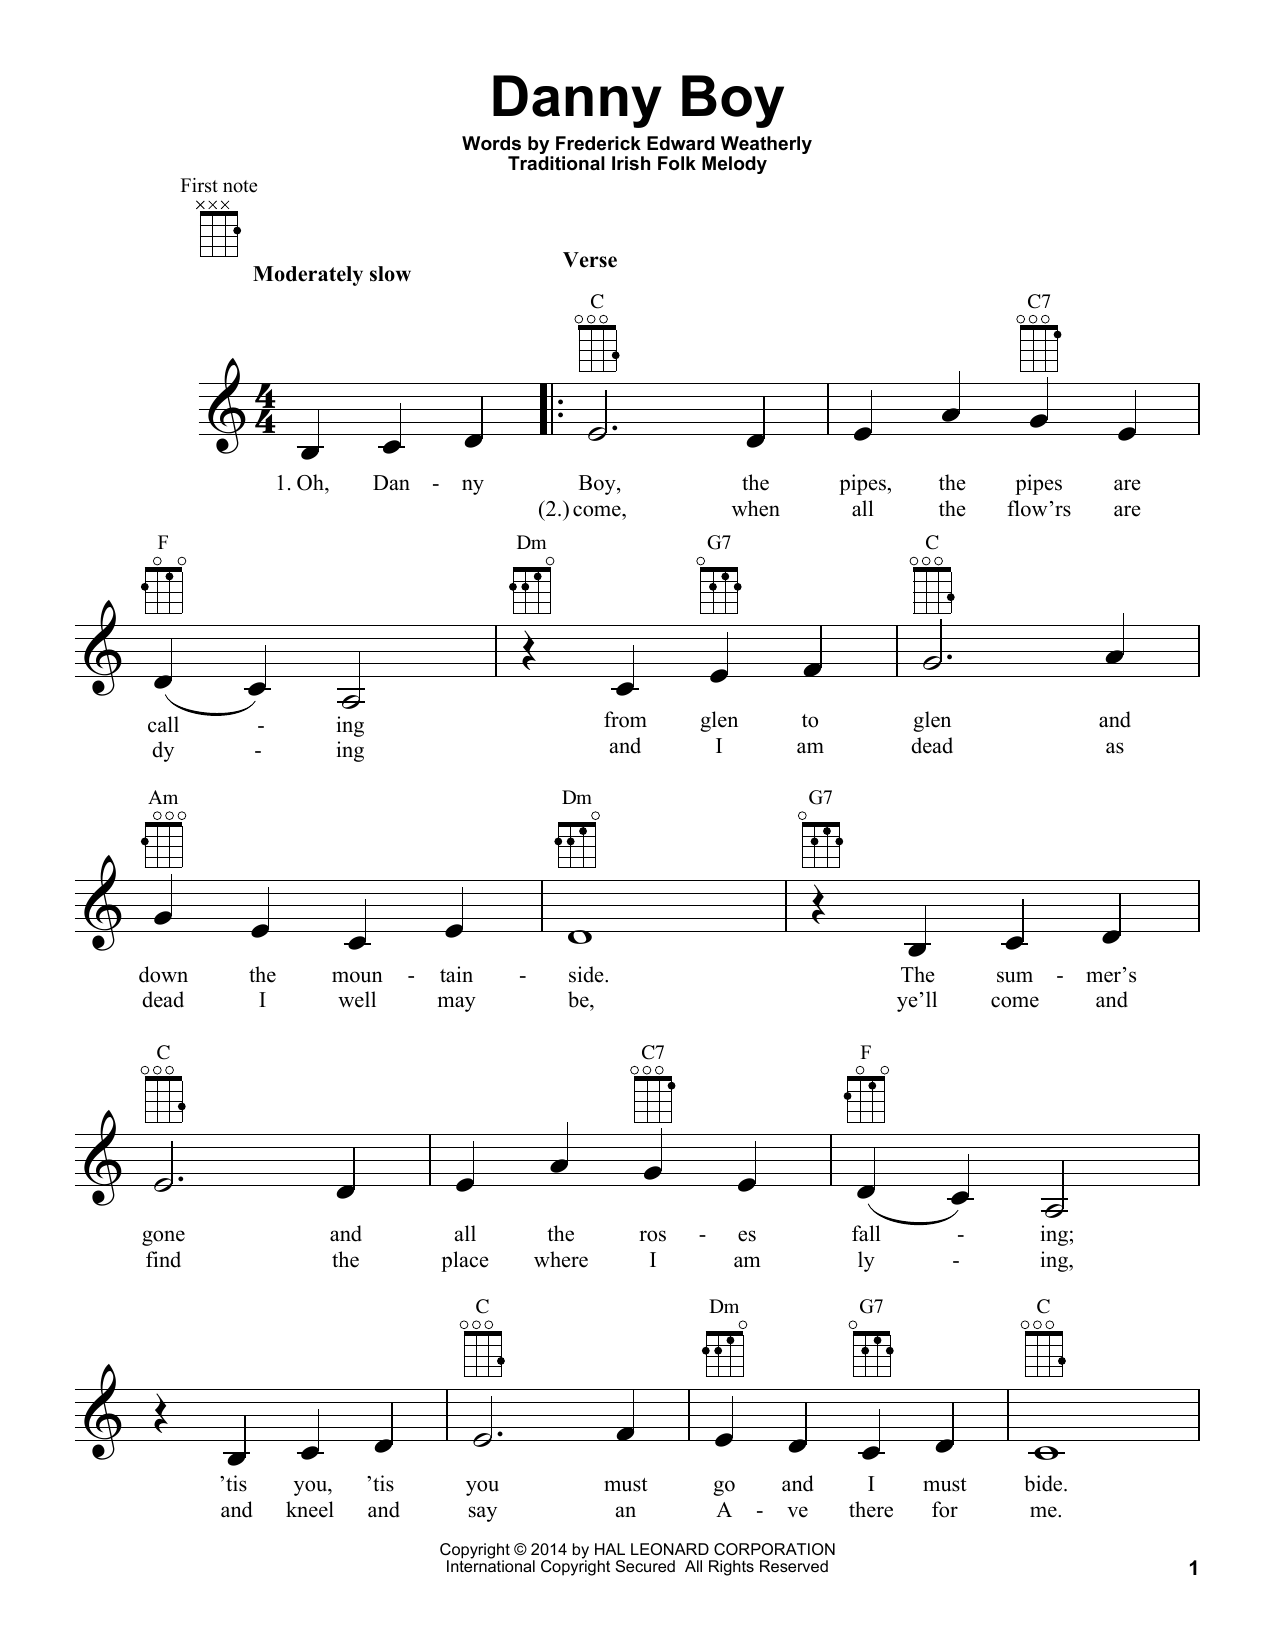 Traditional Irish Danny Boy Sheet Music Notes & Chords for Ukulele - Download or Print PDF